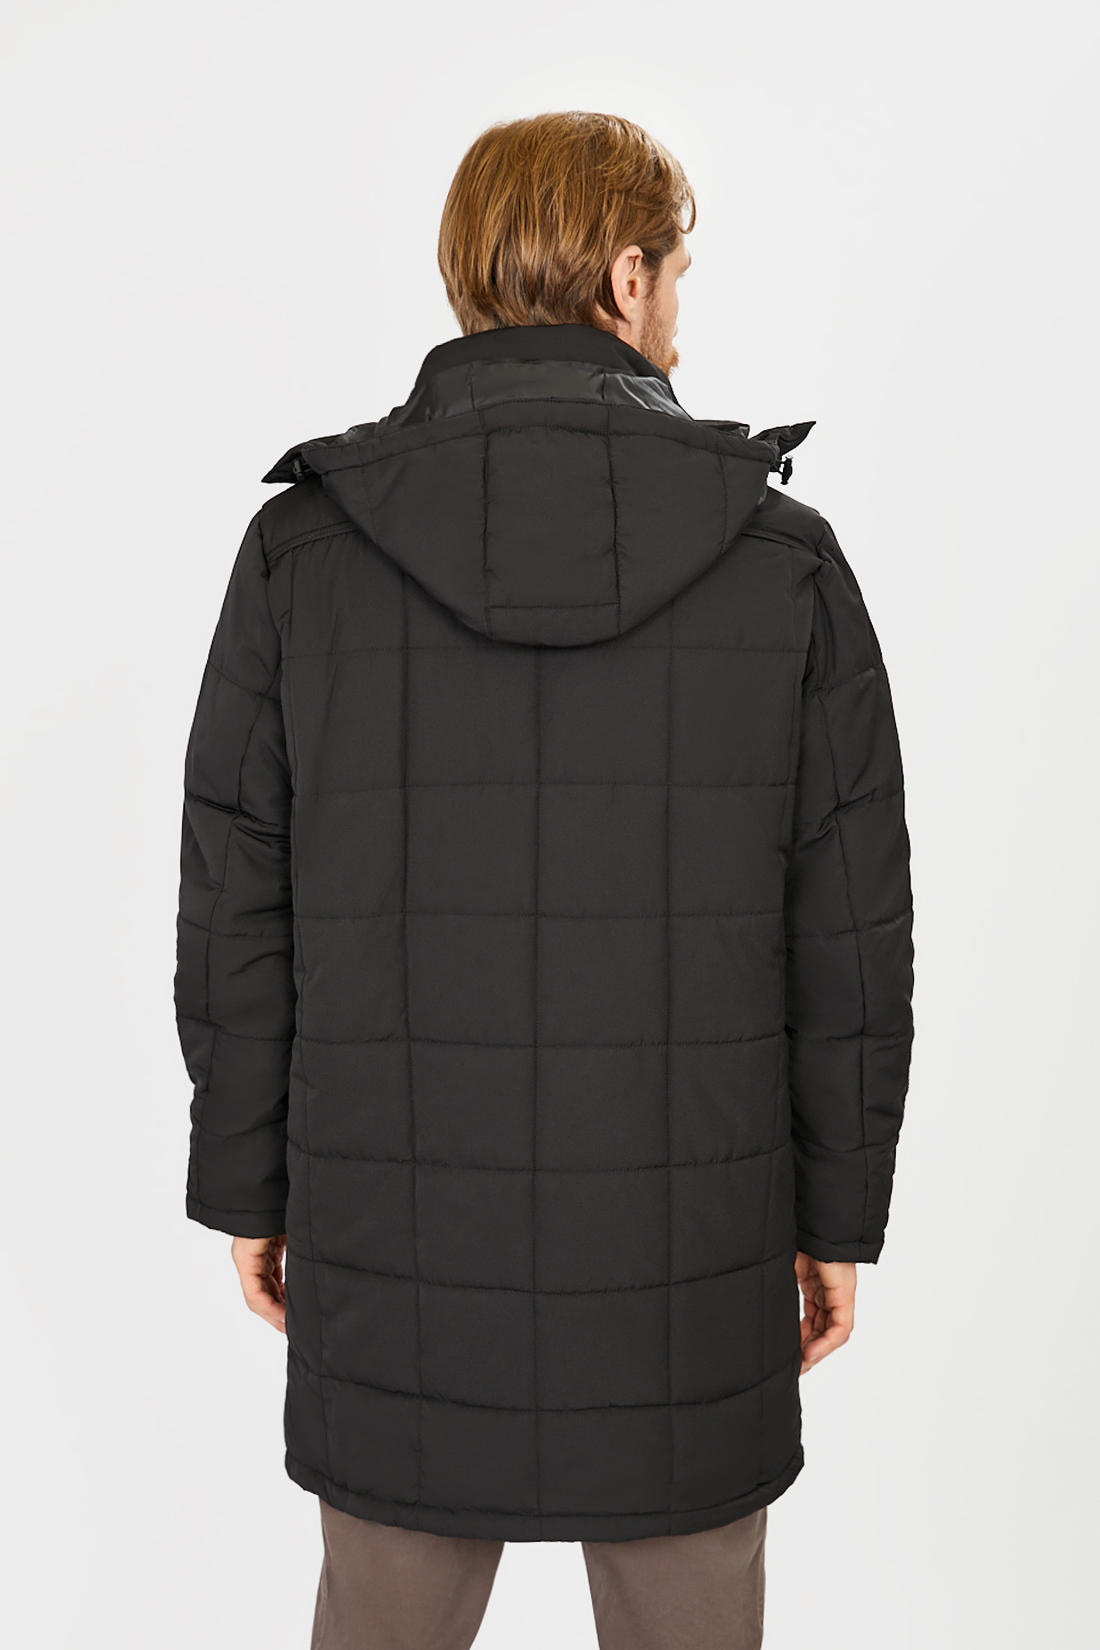 Куртка (арт. baon B531504), размер M, цвет черный Куртка (арт. baon B531504) - фото 2